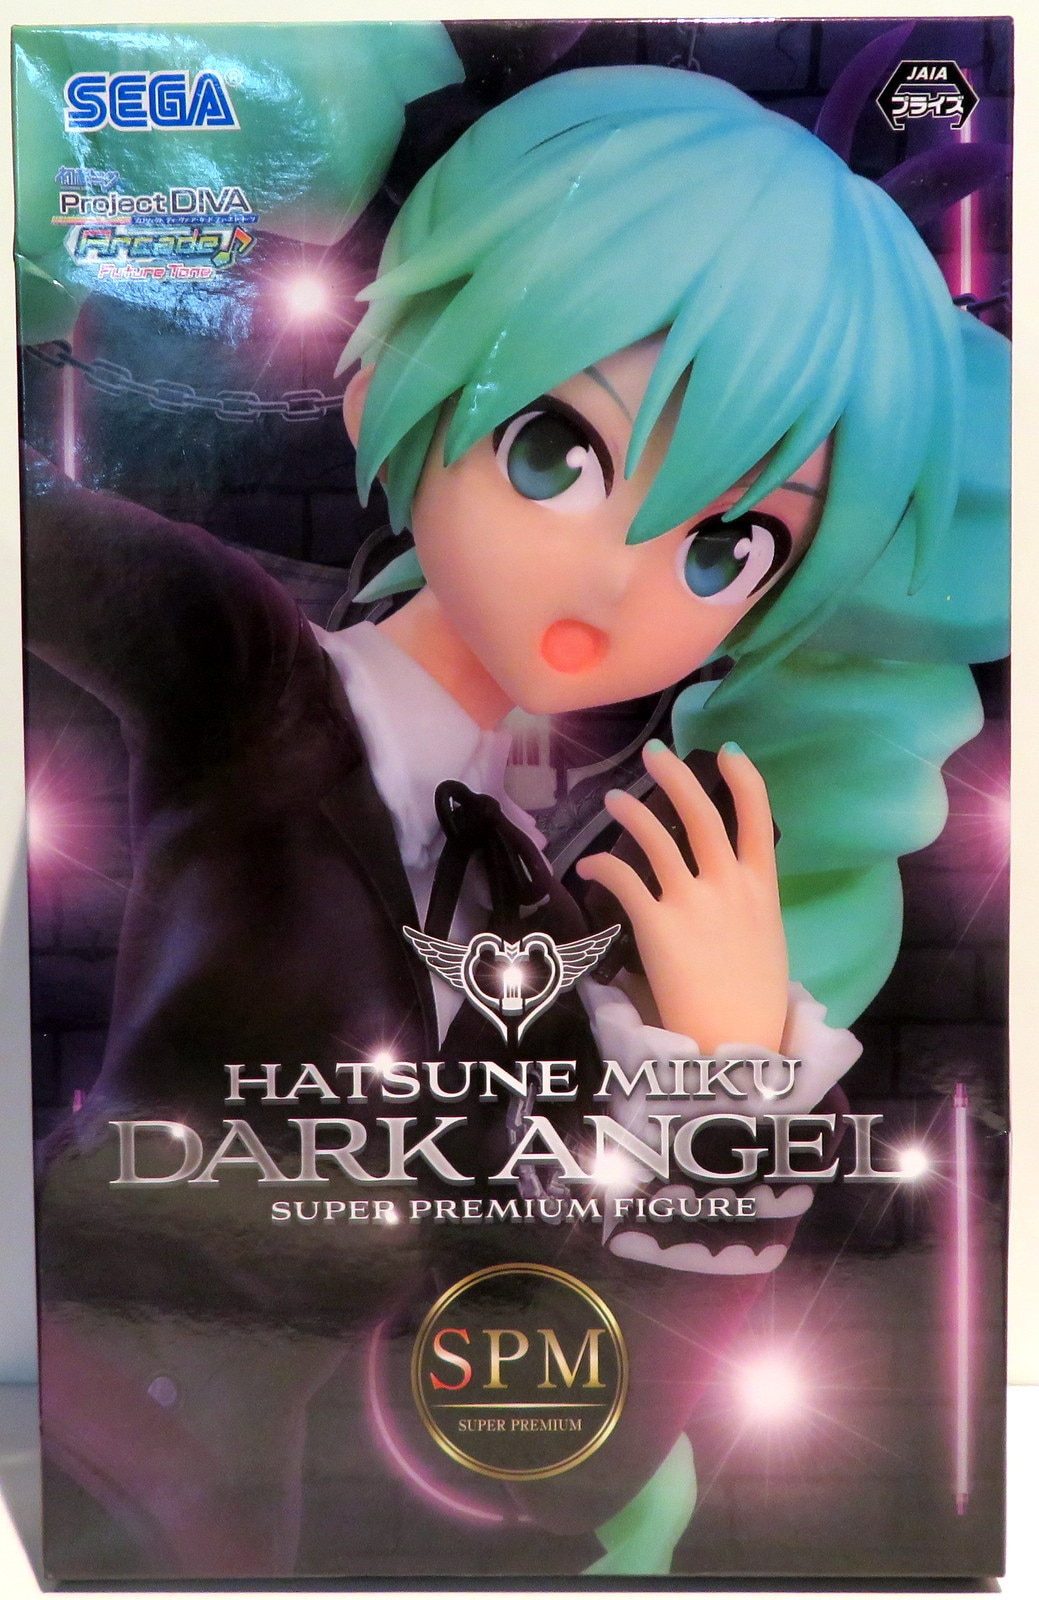 Dark Angel SEGA Hatsune Miku Project DIVA Arcade Future Tone SPM Figure